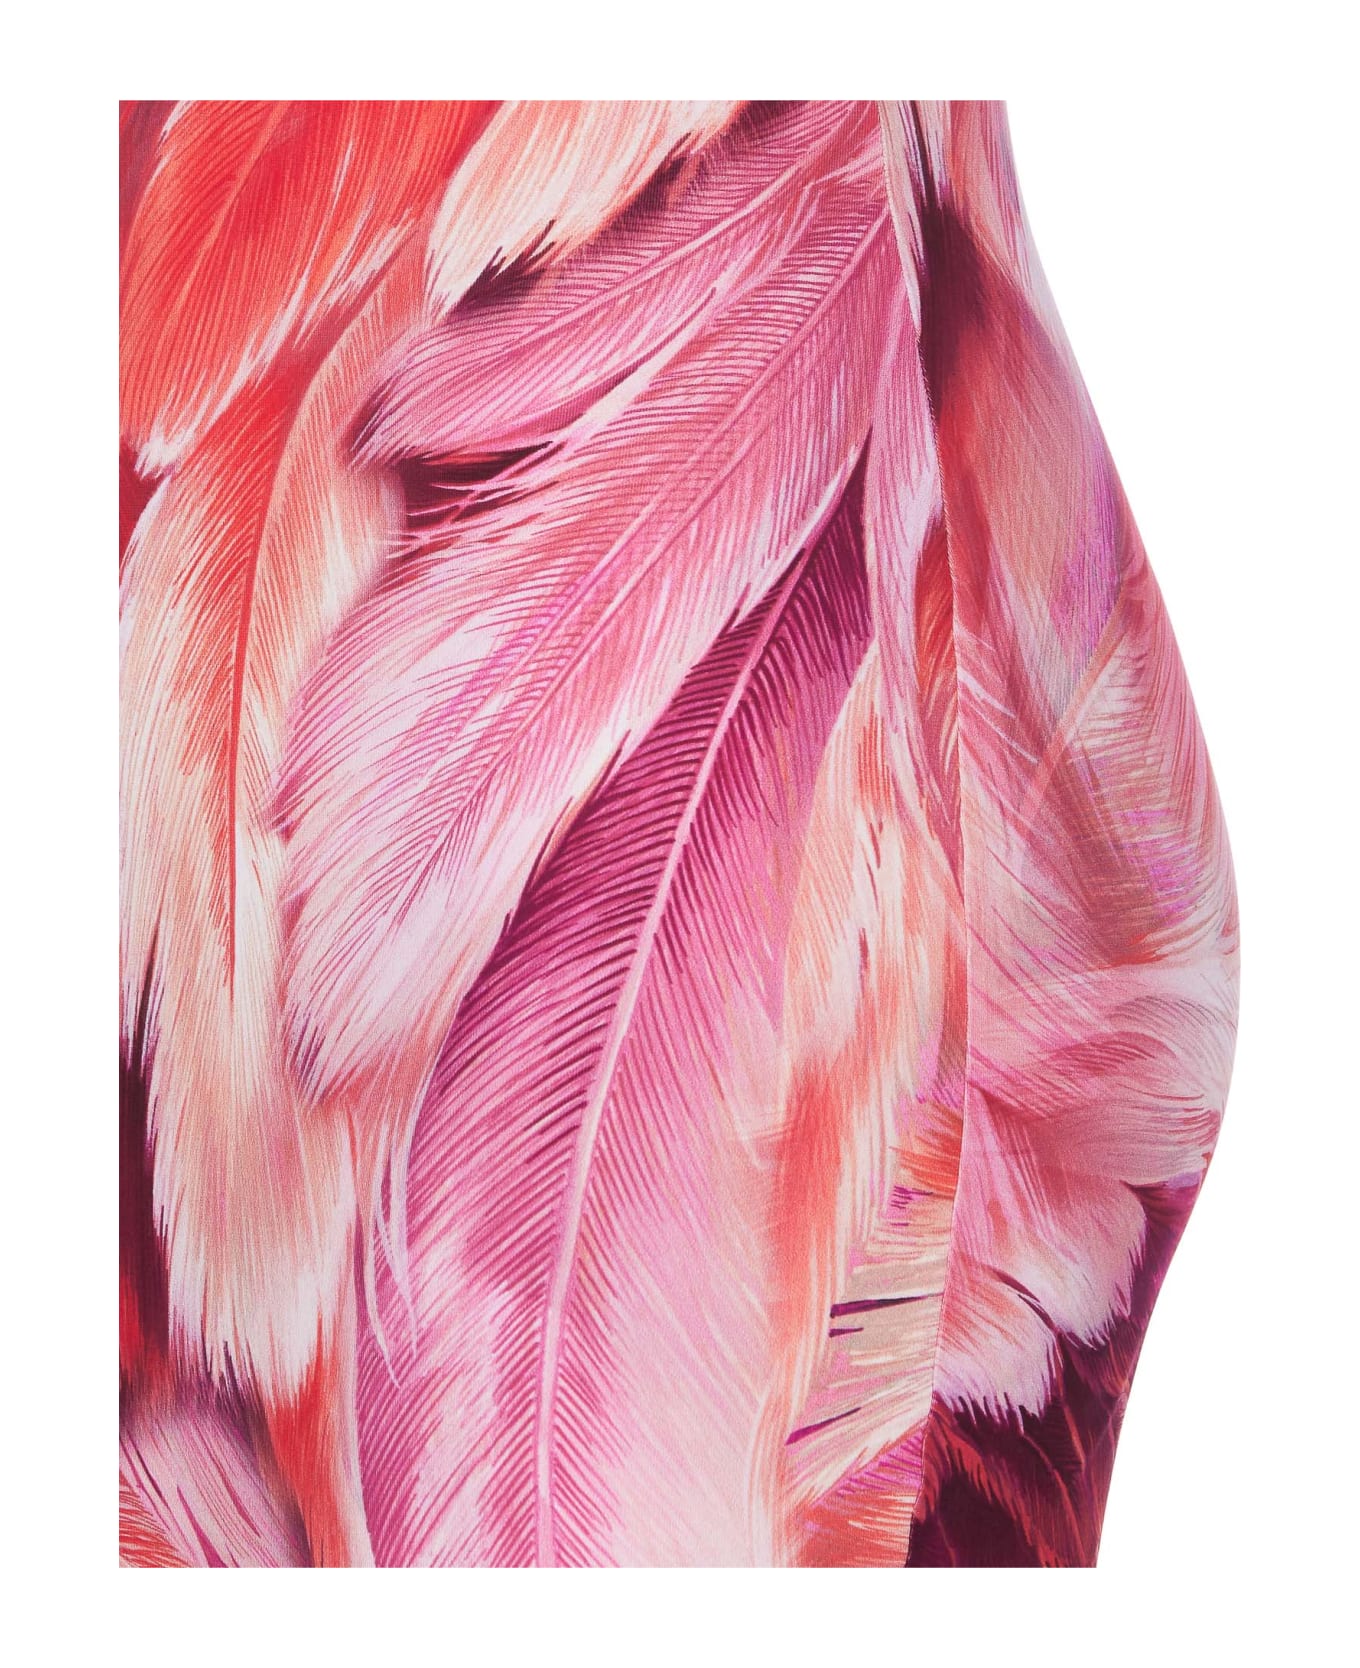 Roberto Cavalli Plumage Print Dress - PINK